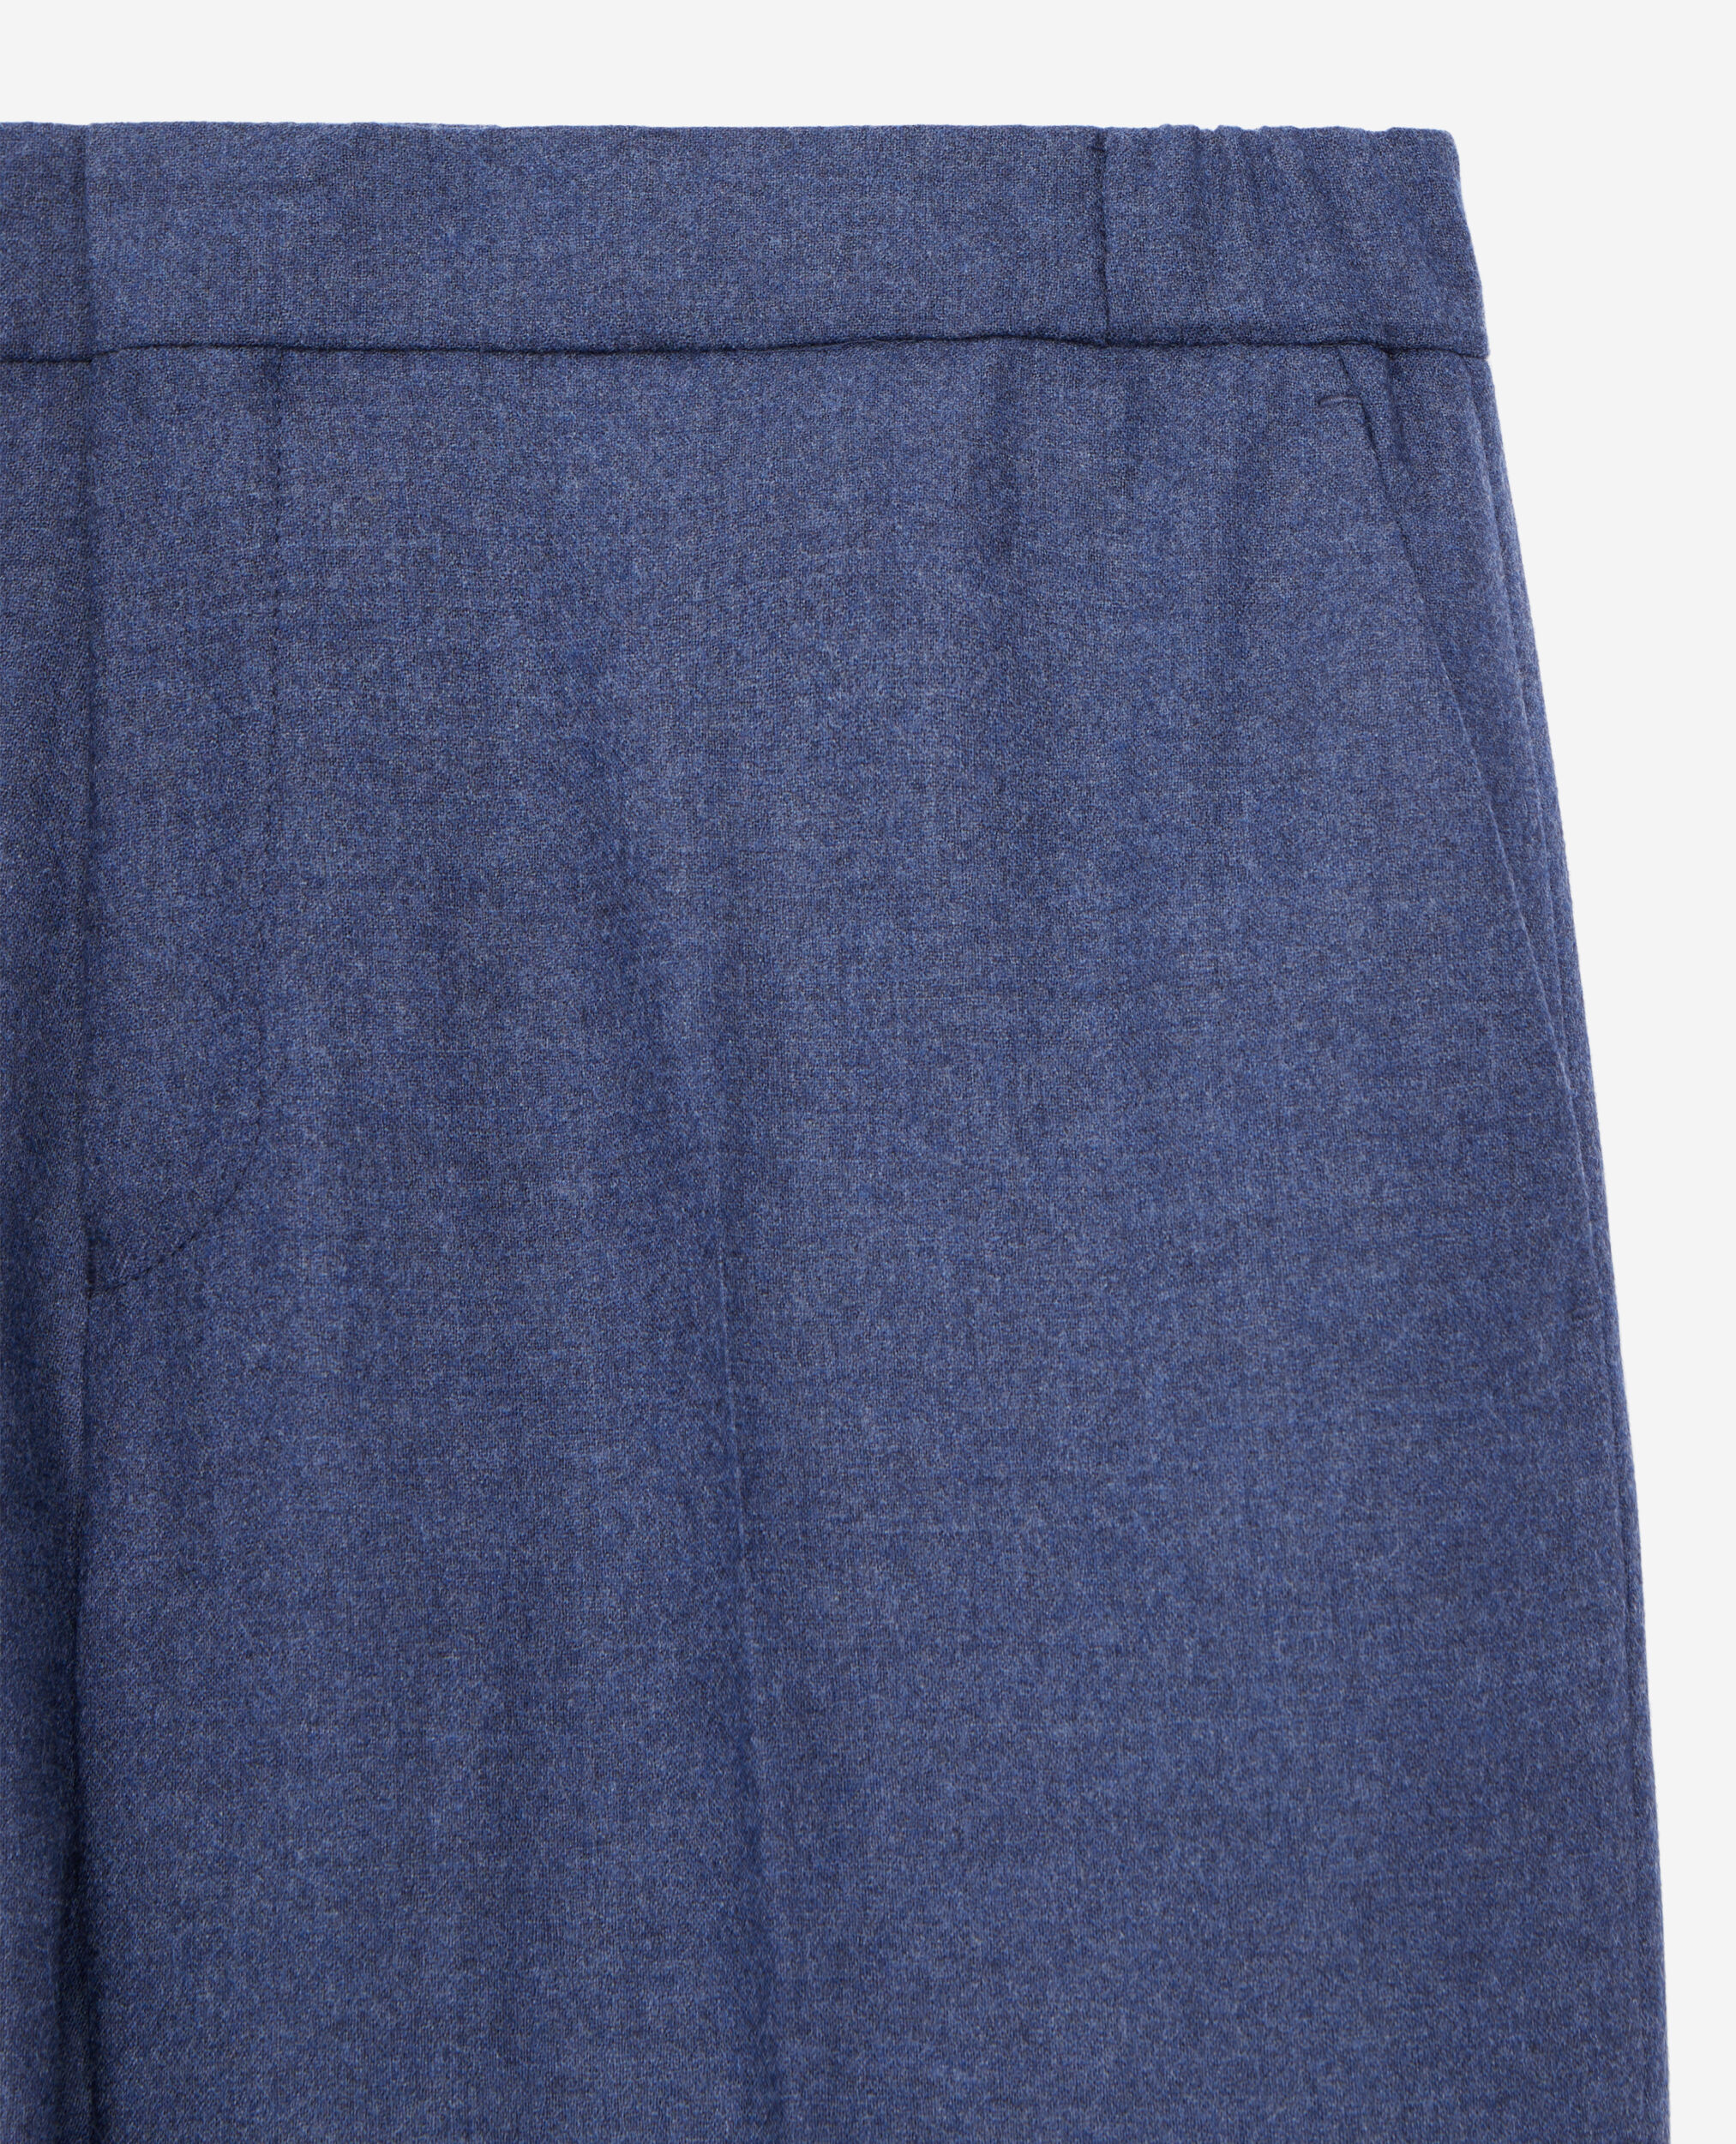 Pantalón azul franela, BLUE, hi-res image number null